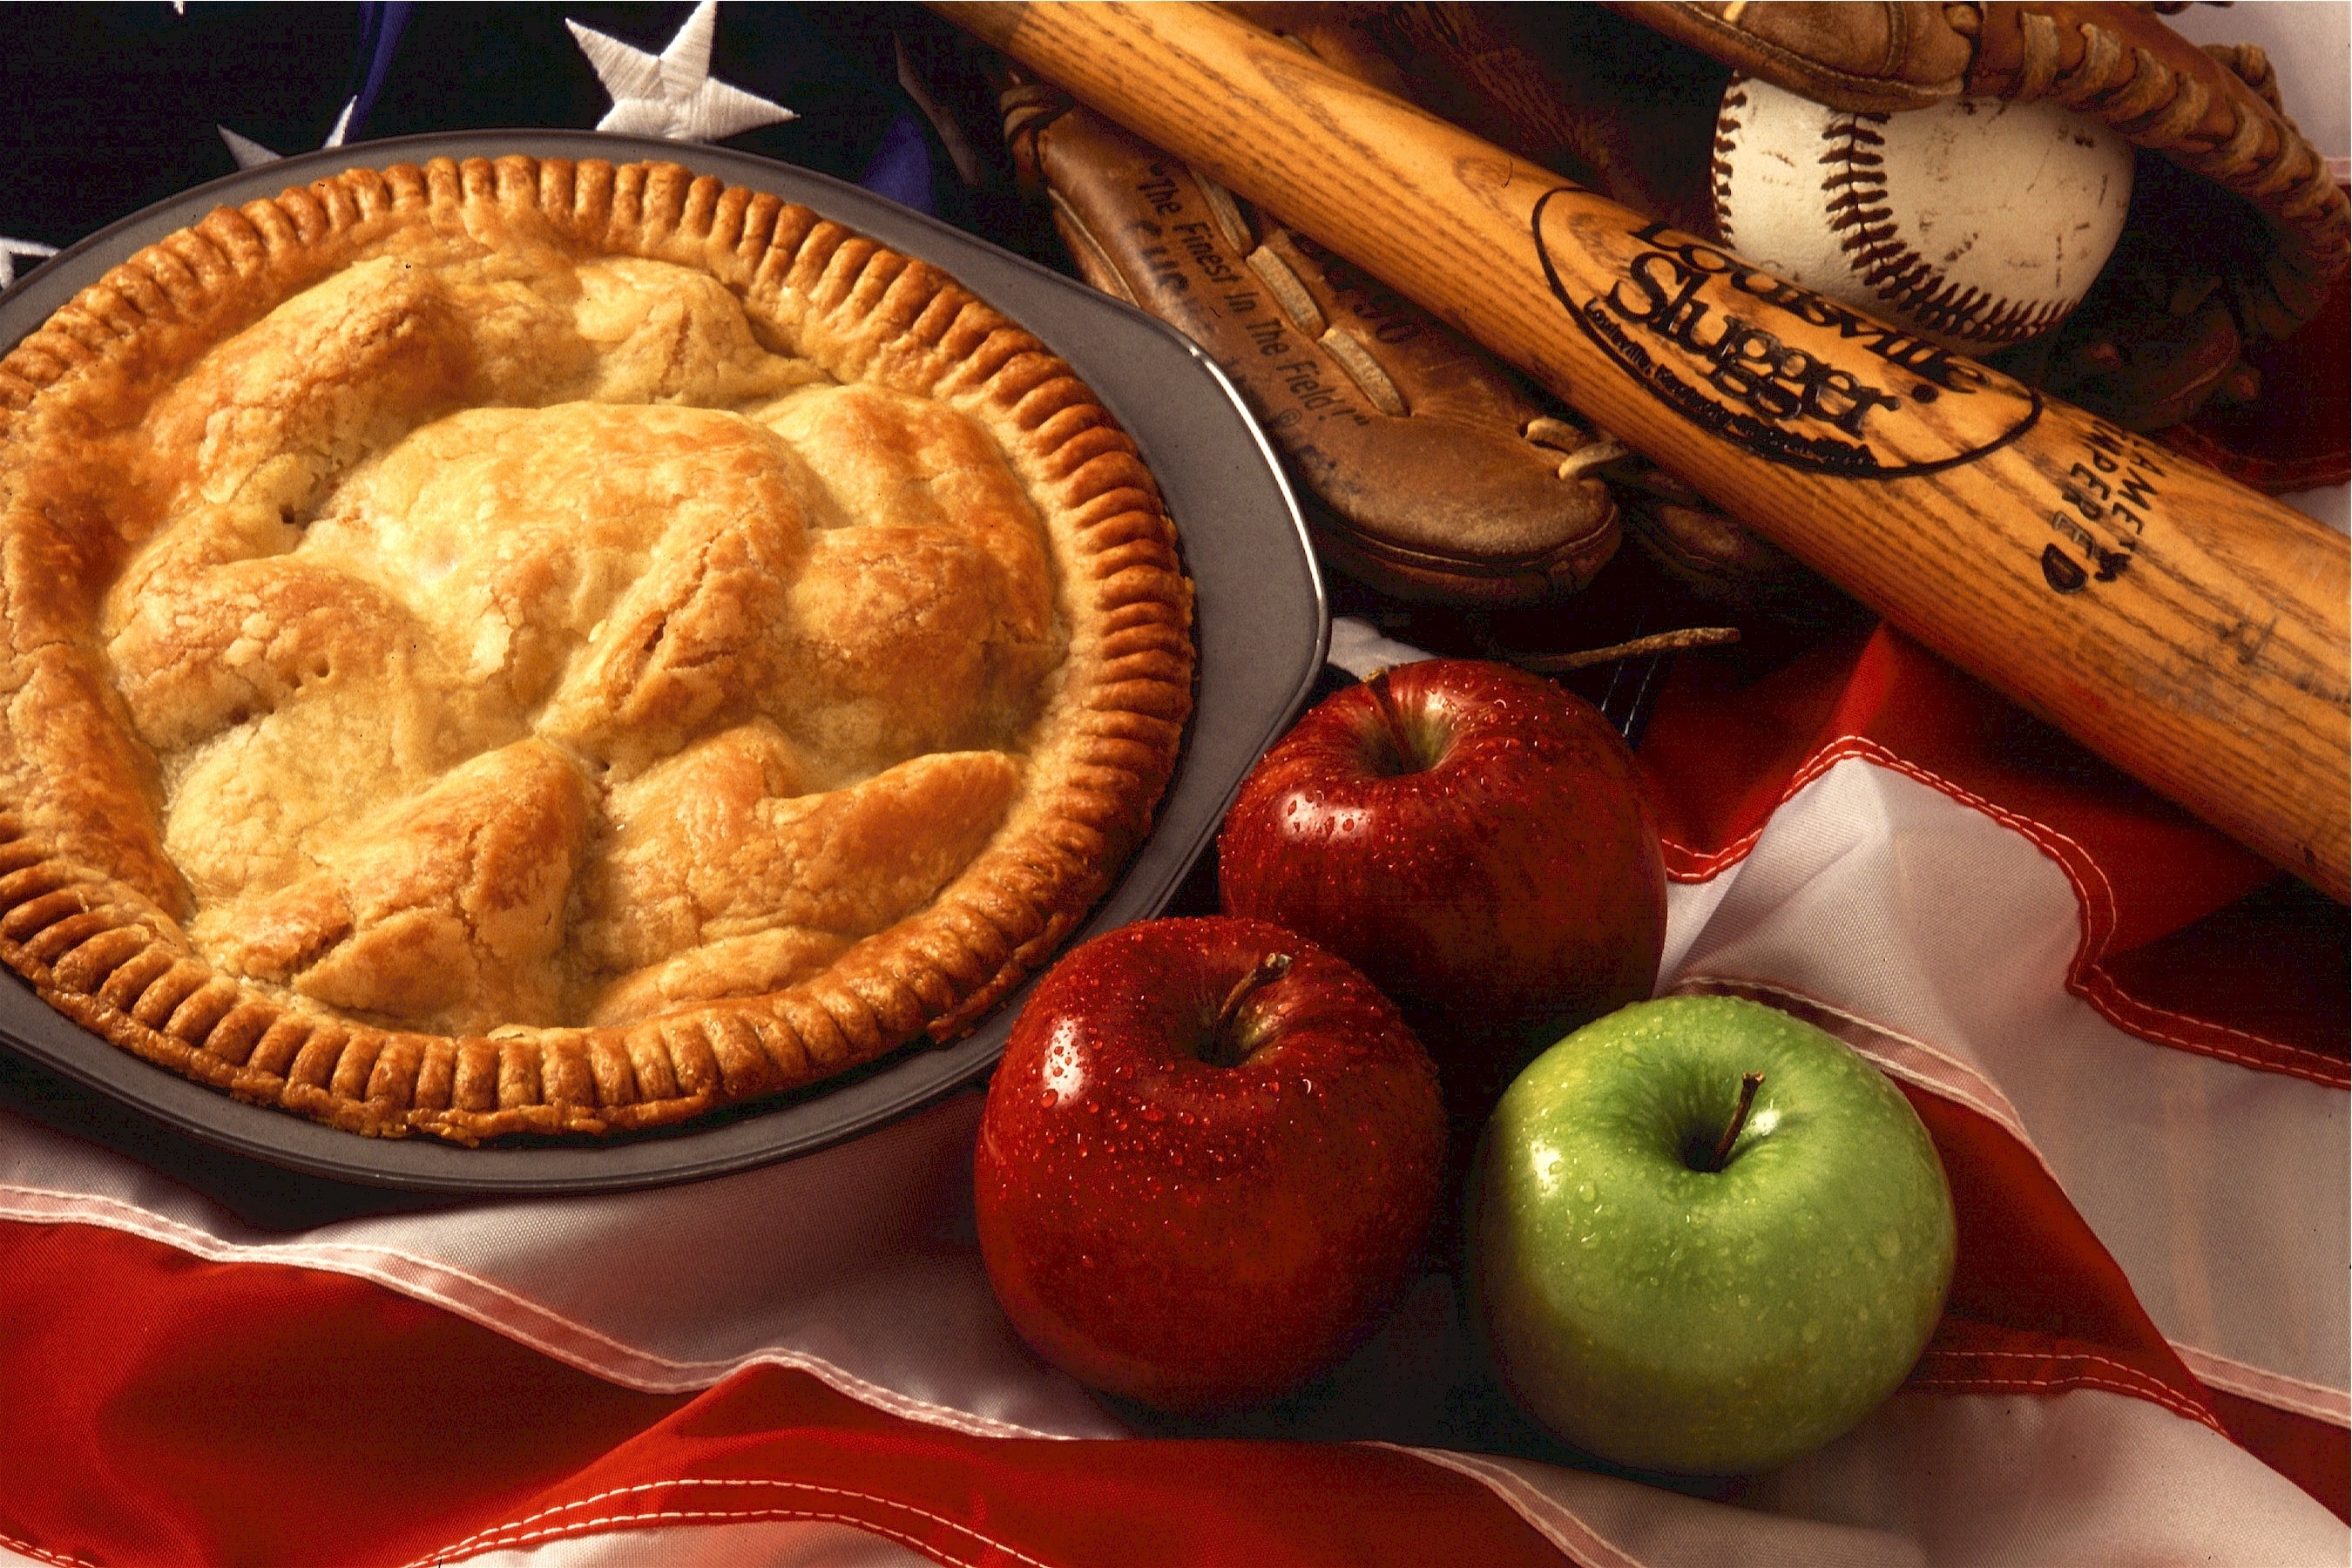 beige pie and three apples